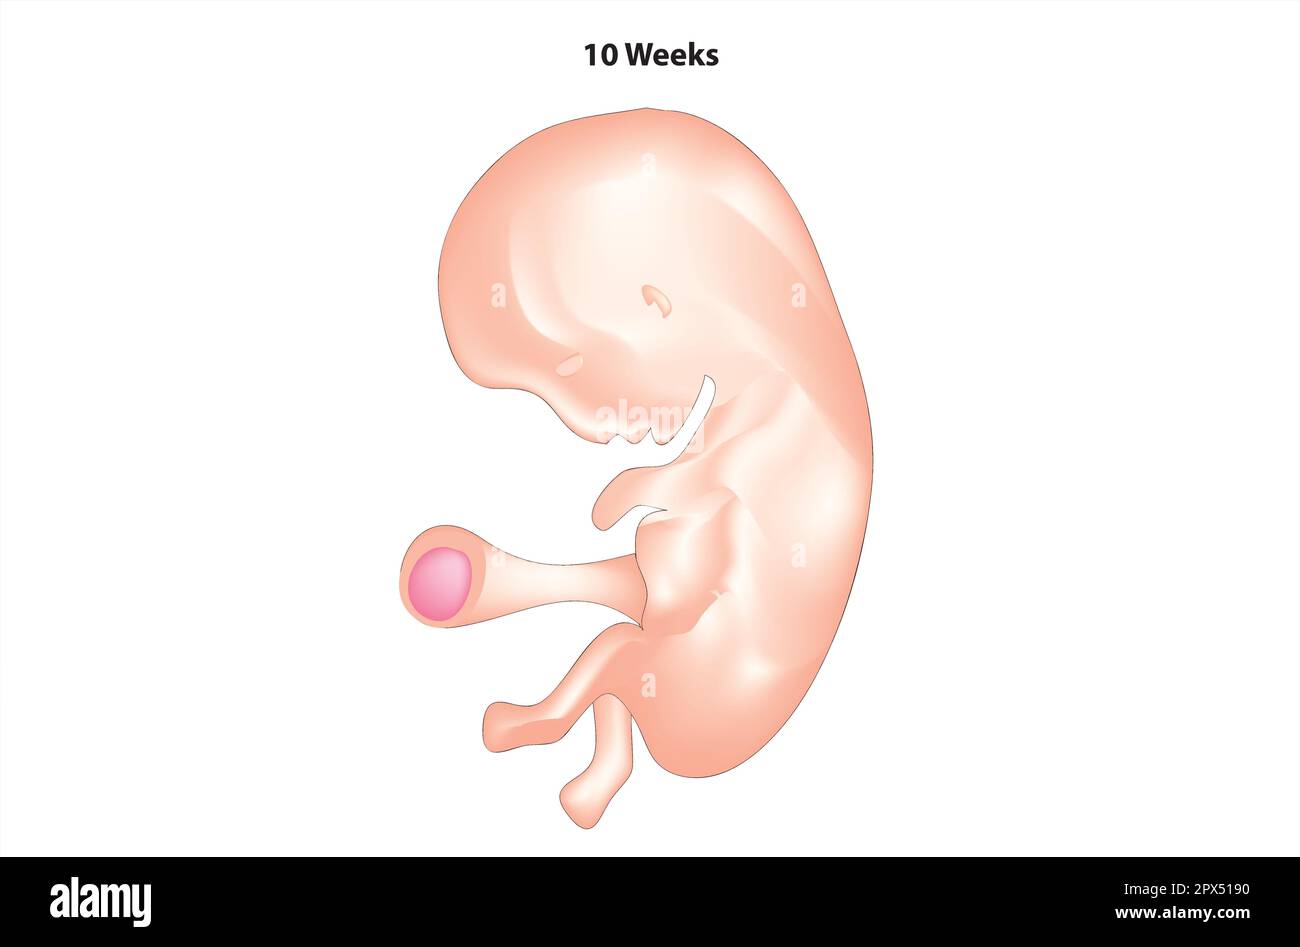 Anatomy of 10 weeks fetus Stock Vector